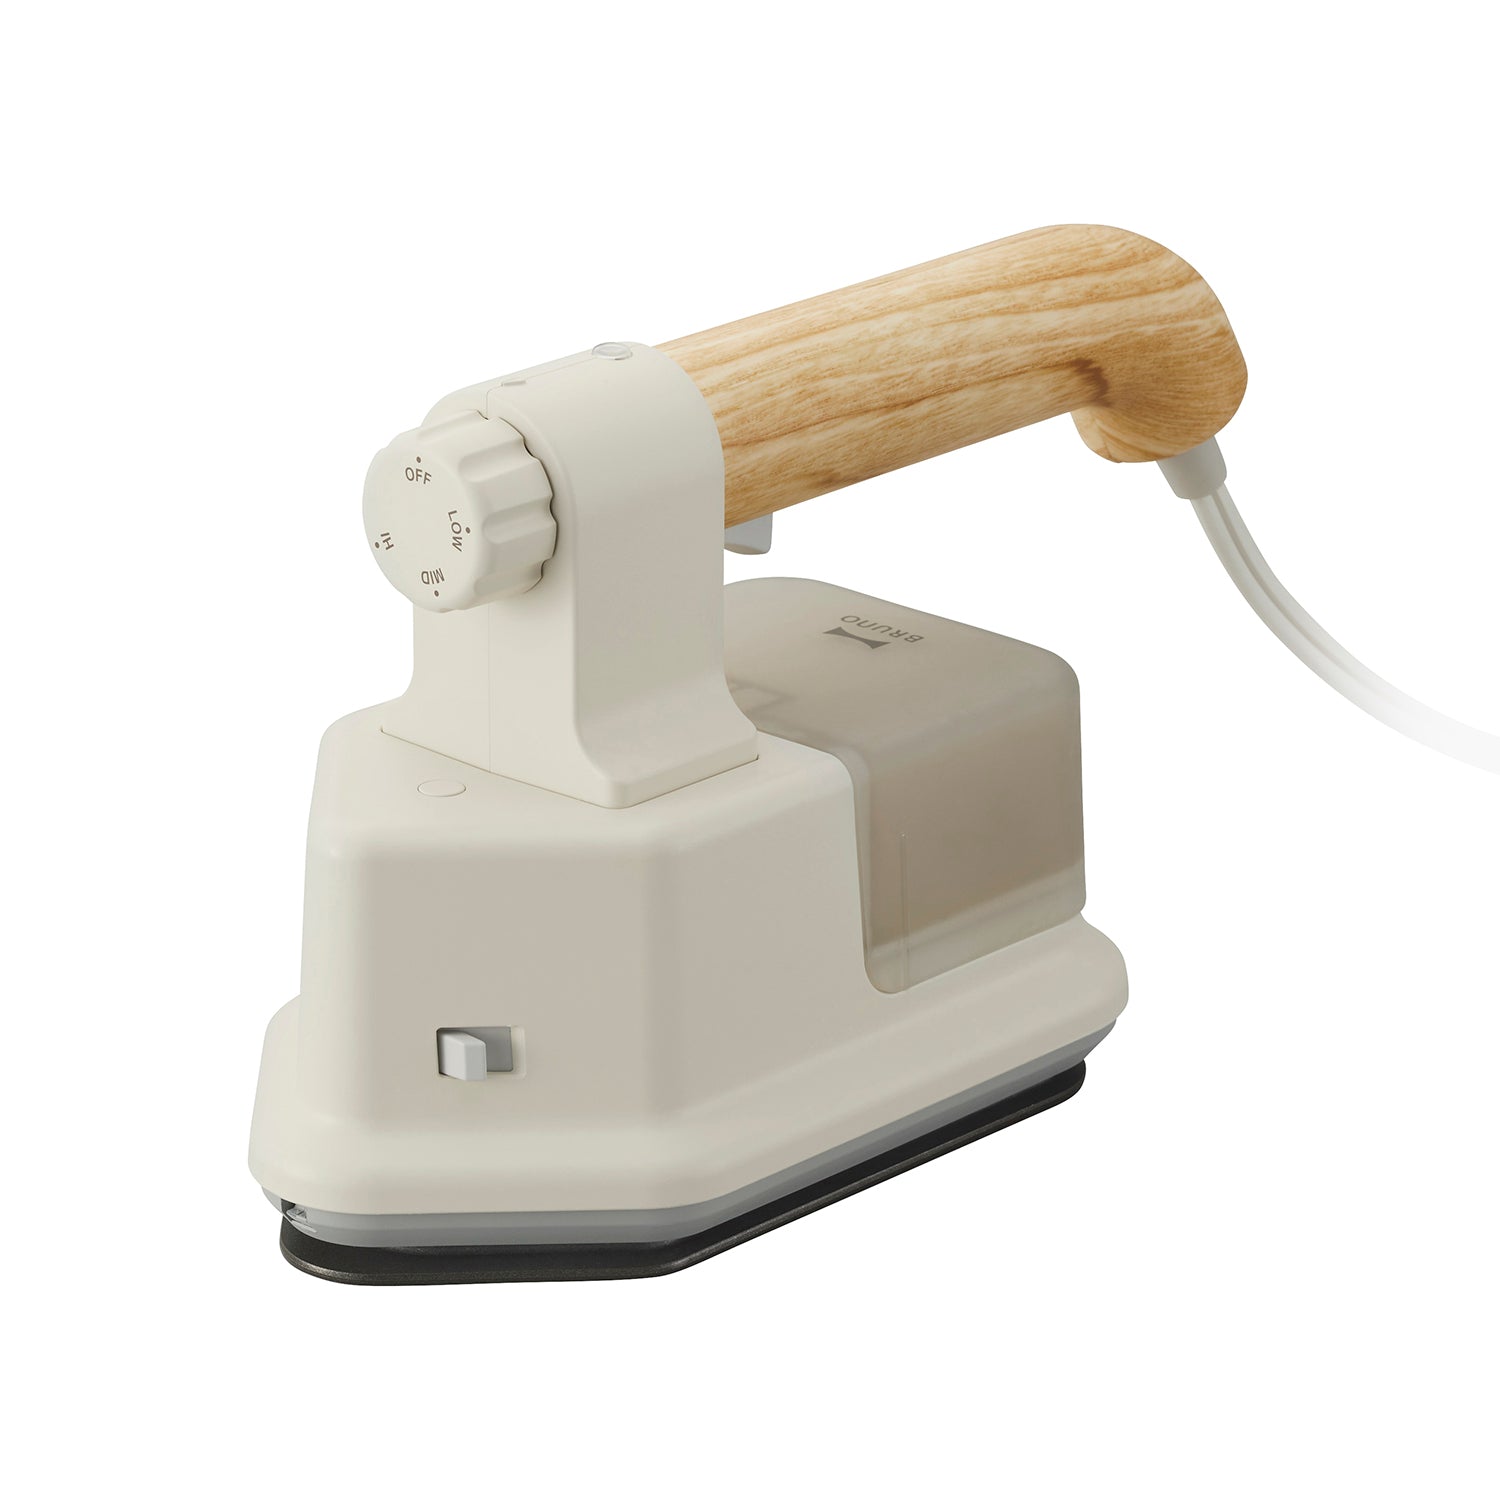 BRUNO Handy and Press Steamer - Ivory